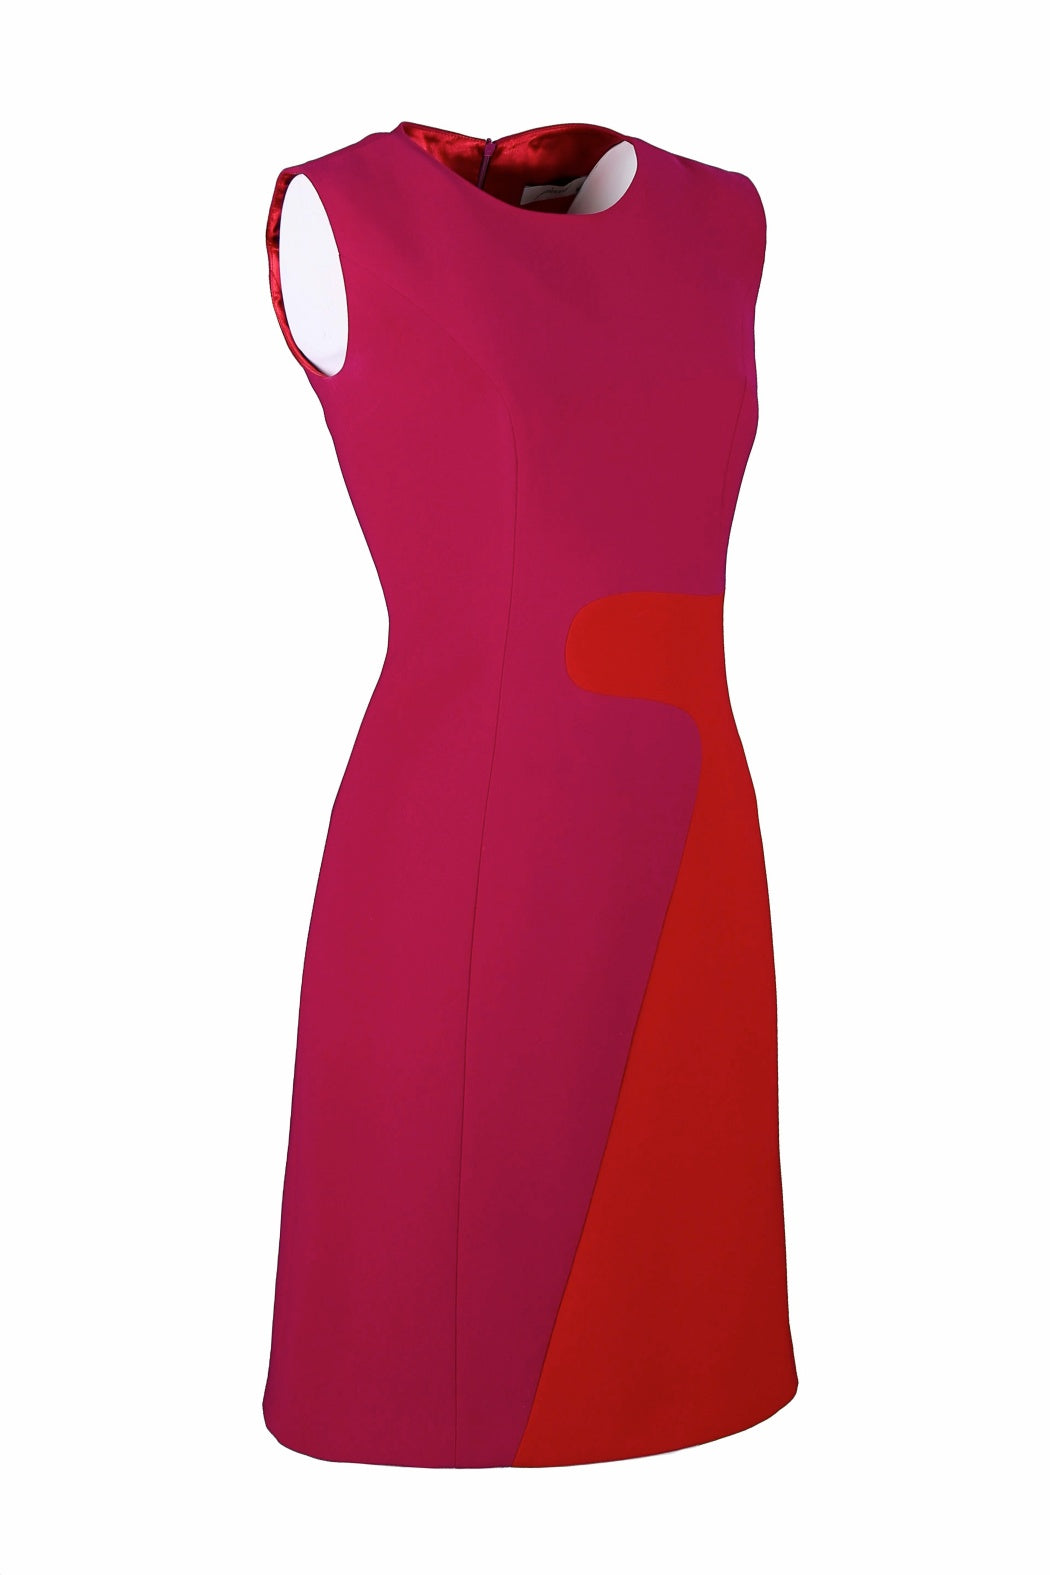 Block Pink & Red Round Neck Sleeveless Mini Crepe Dress